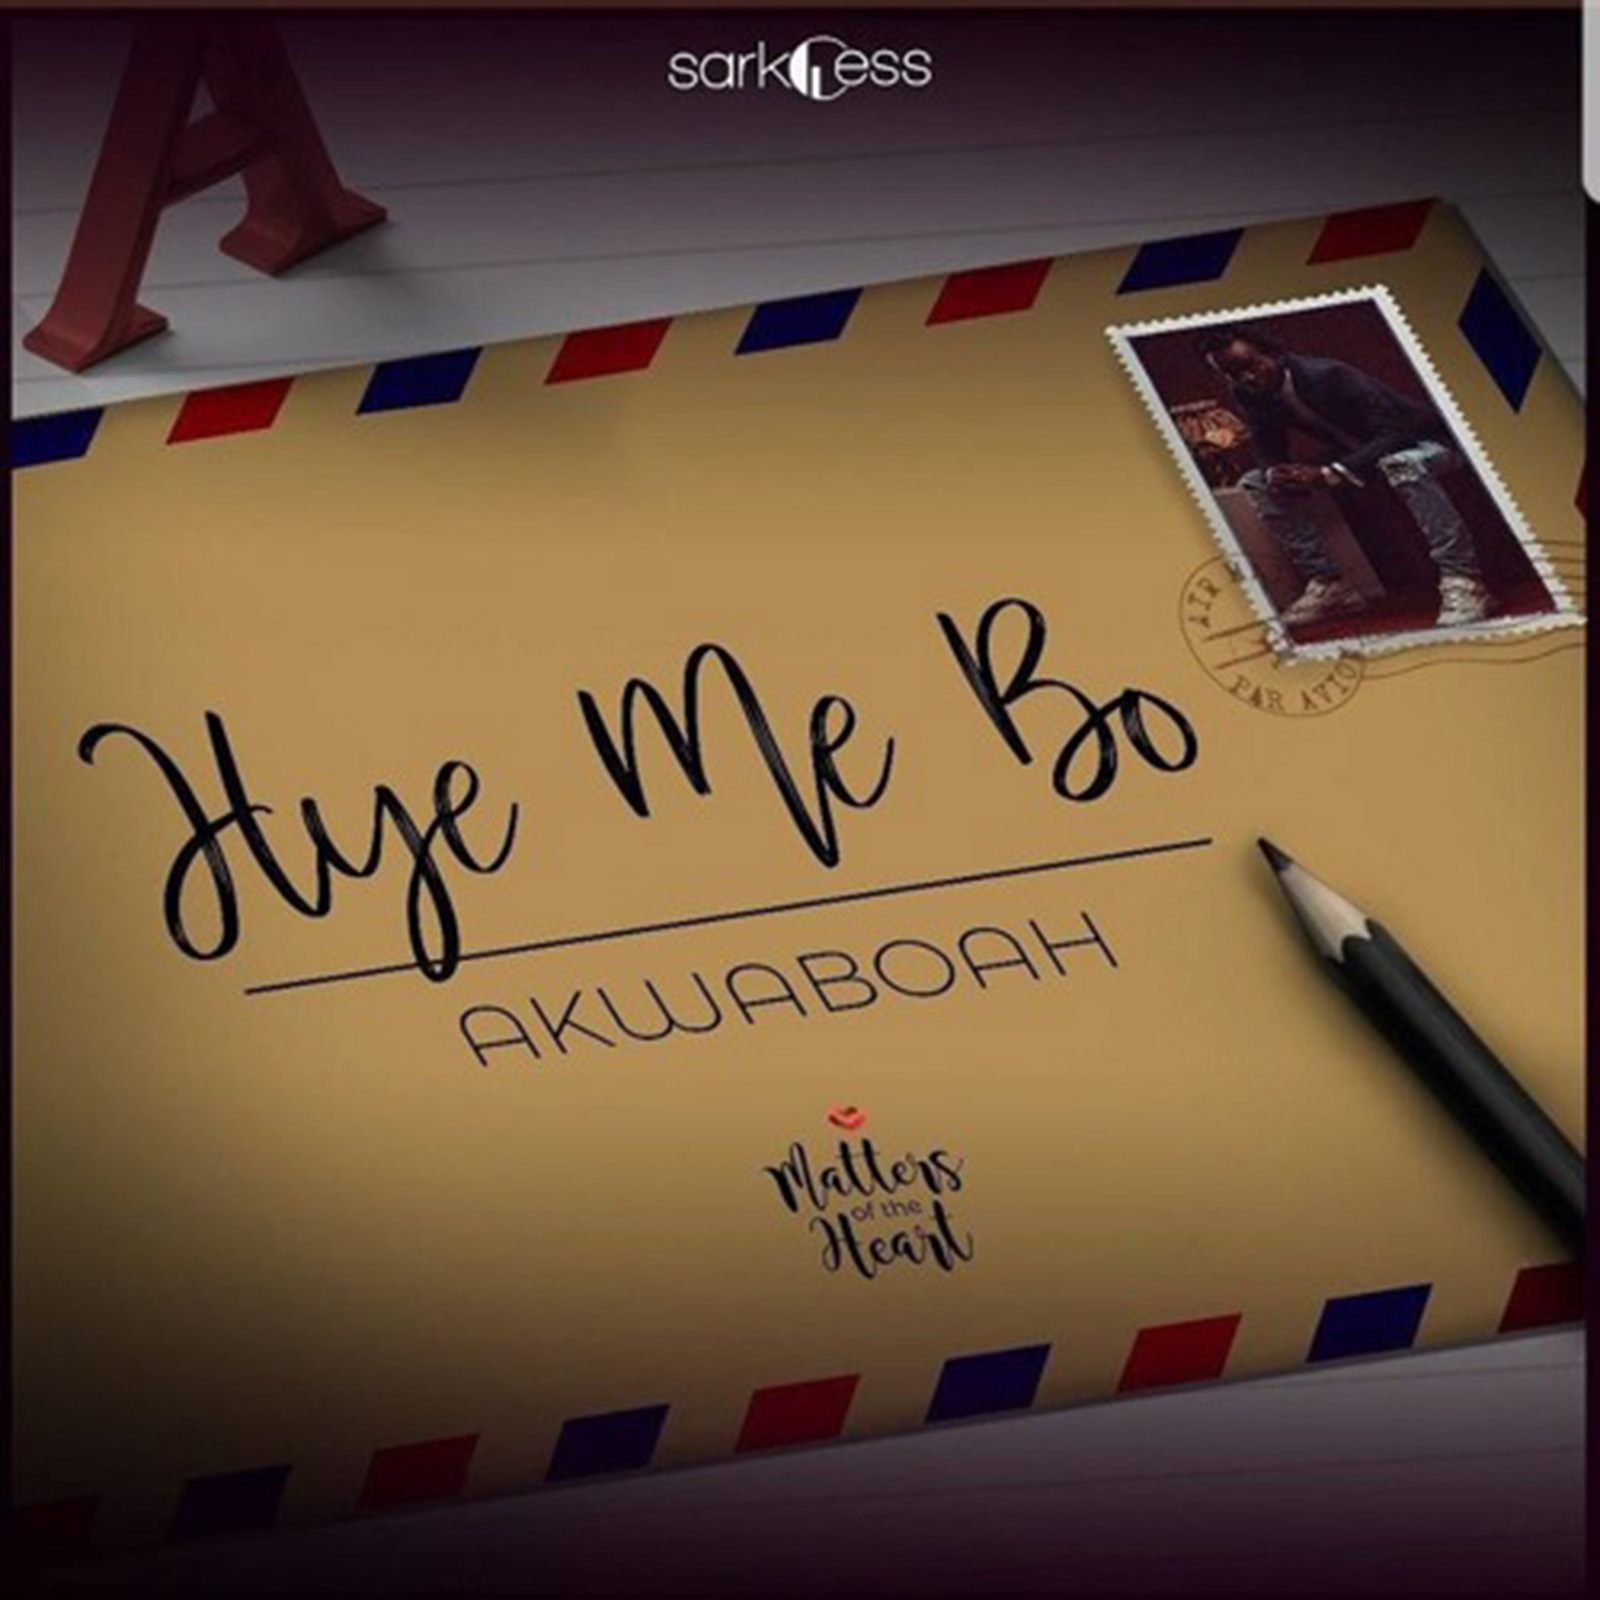 Hye Me Bo by Akwaboah